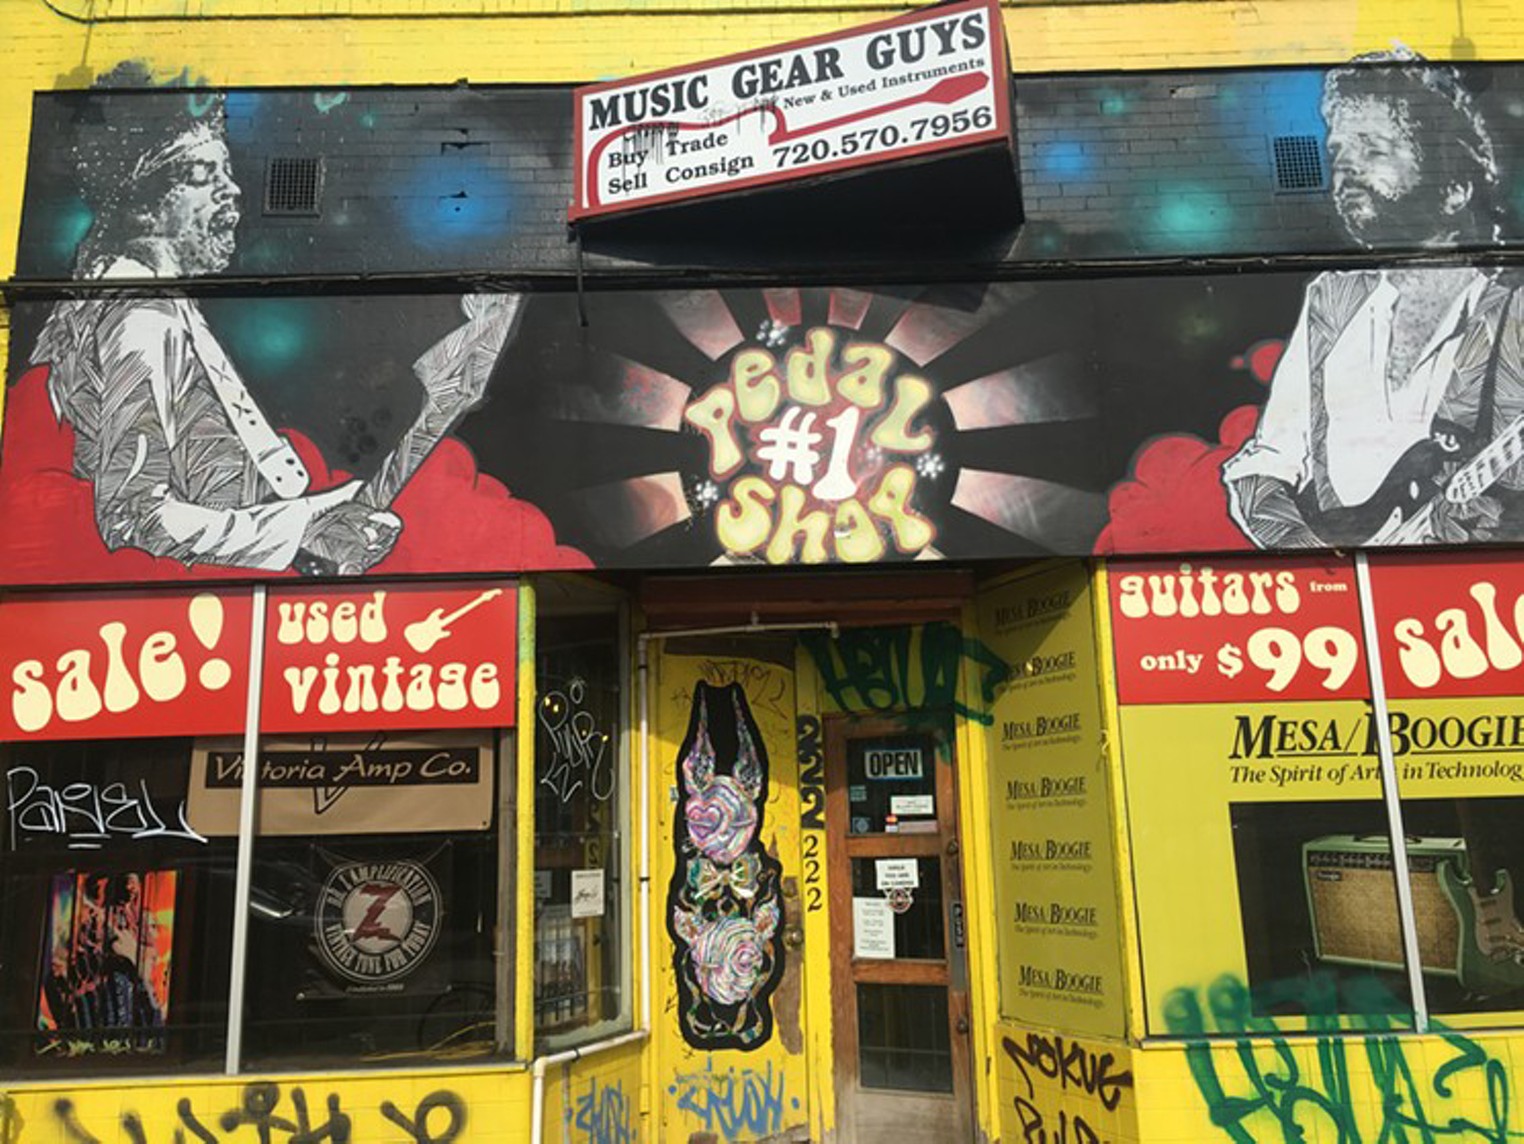 Music Gear Guys Closes Broadway Store, Denver Rent Too High